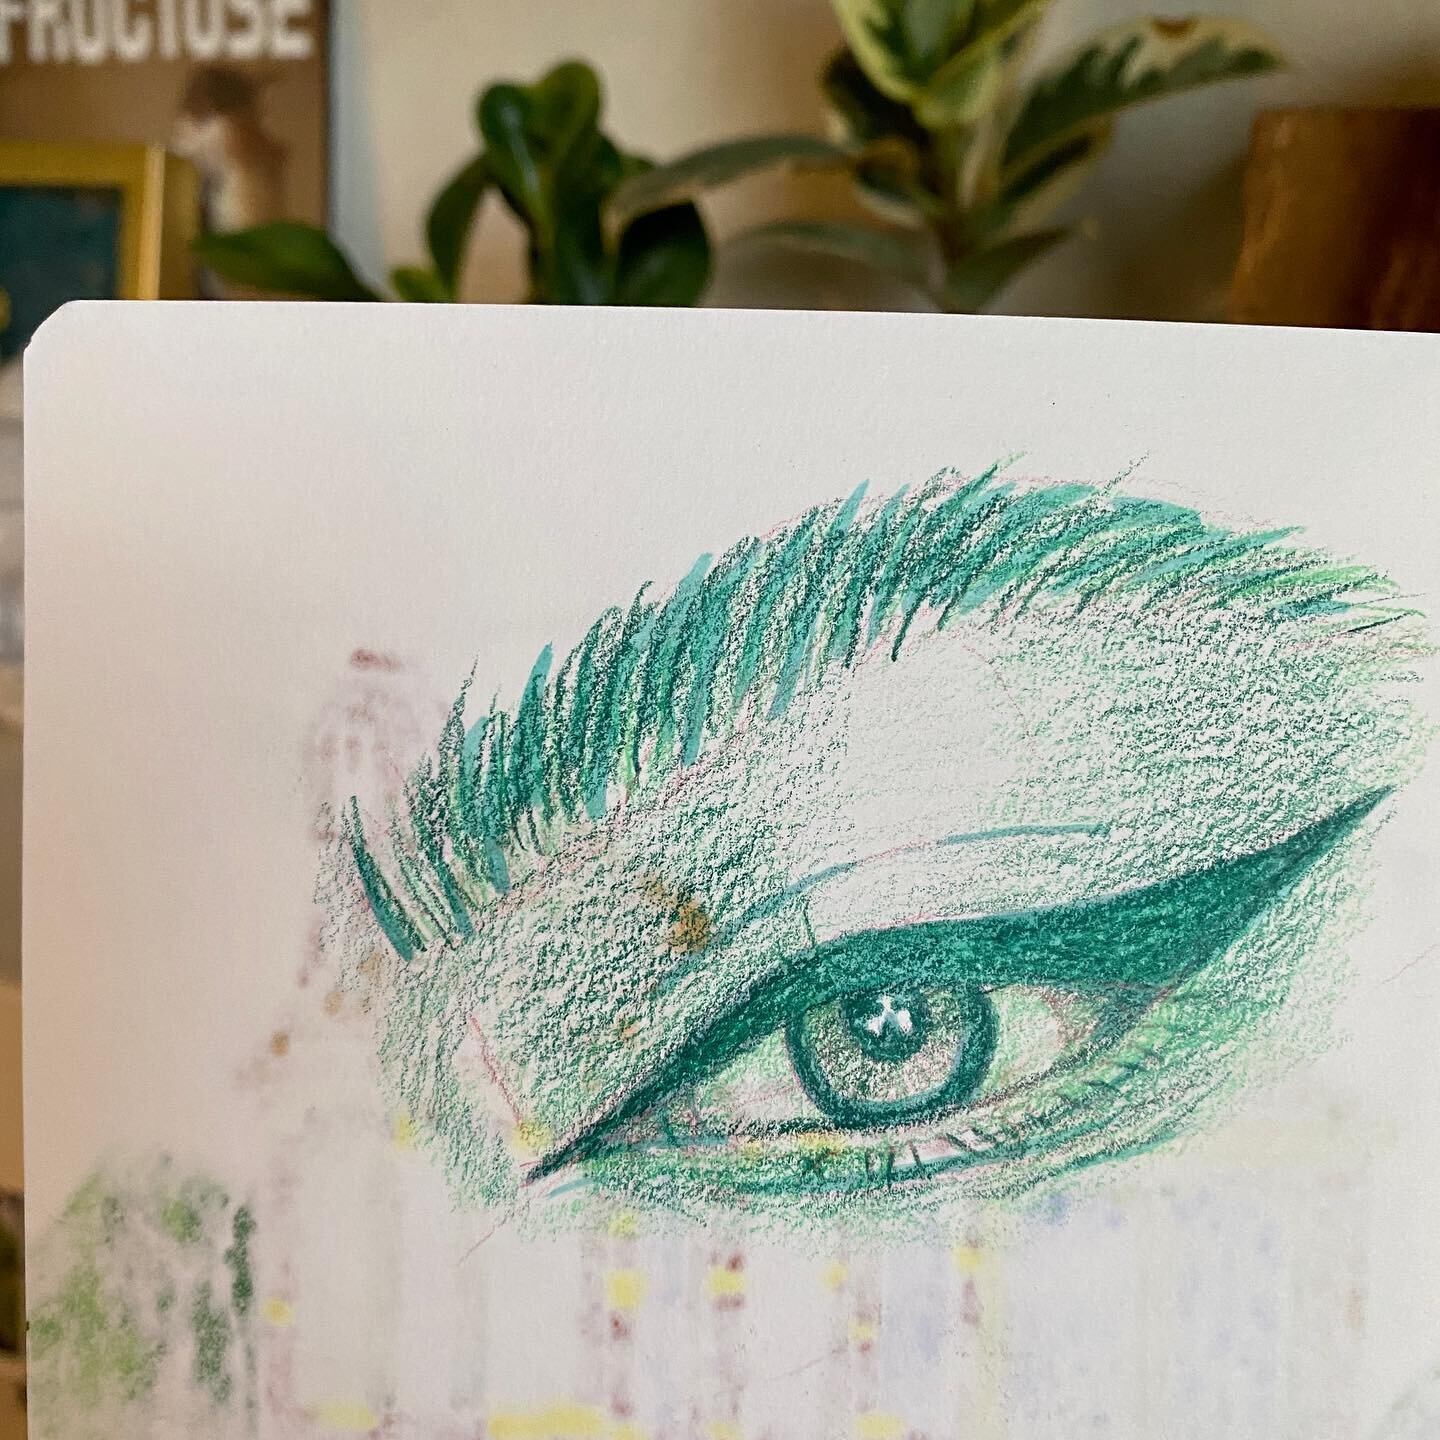 23/365 another eye study!

#dailydrawing #eyestudy #dailysketch #sketchaday #draw365 #the100dayproject